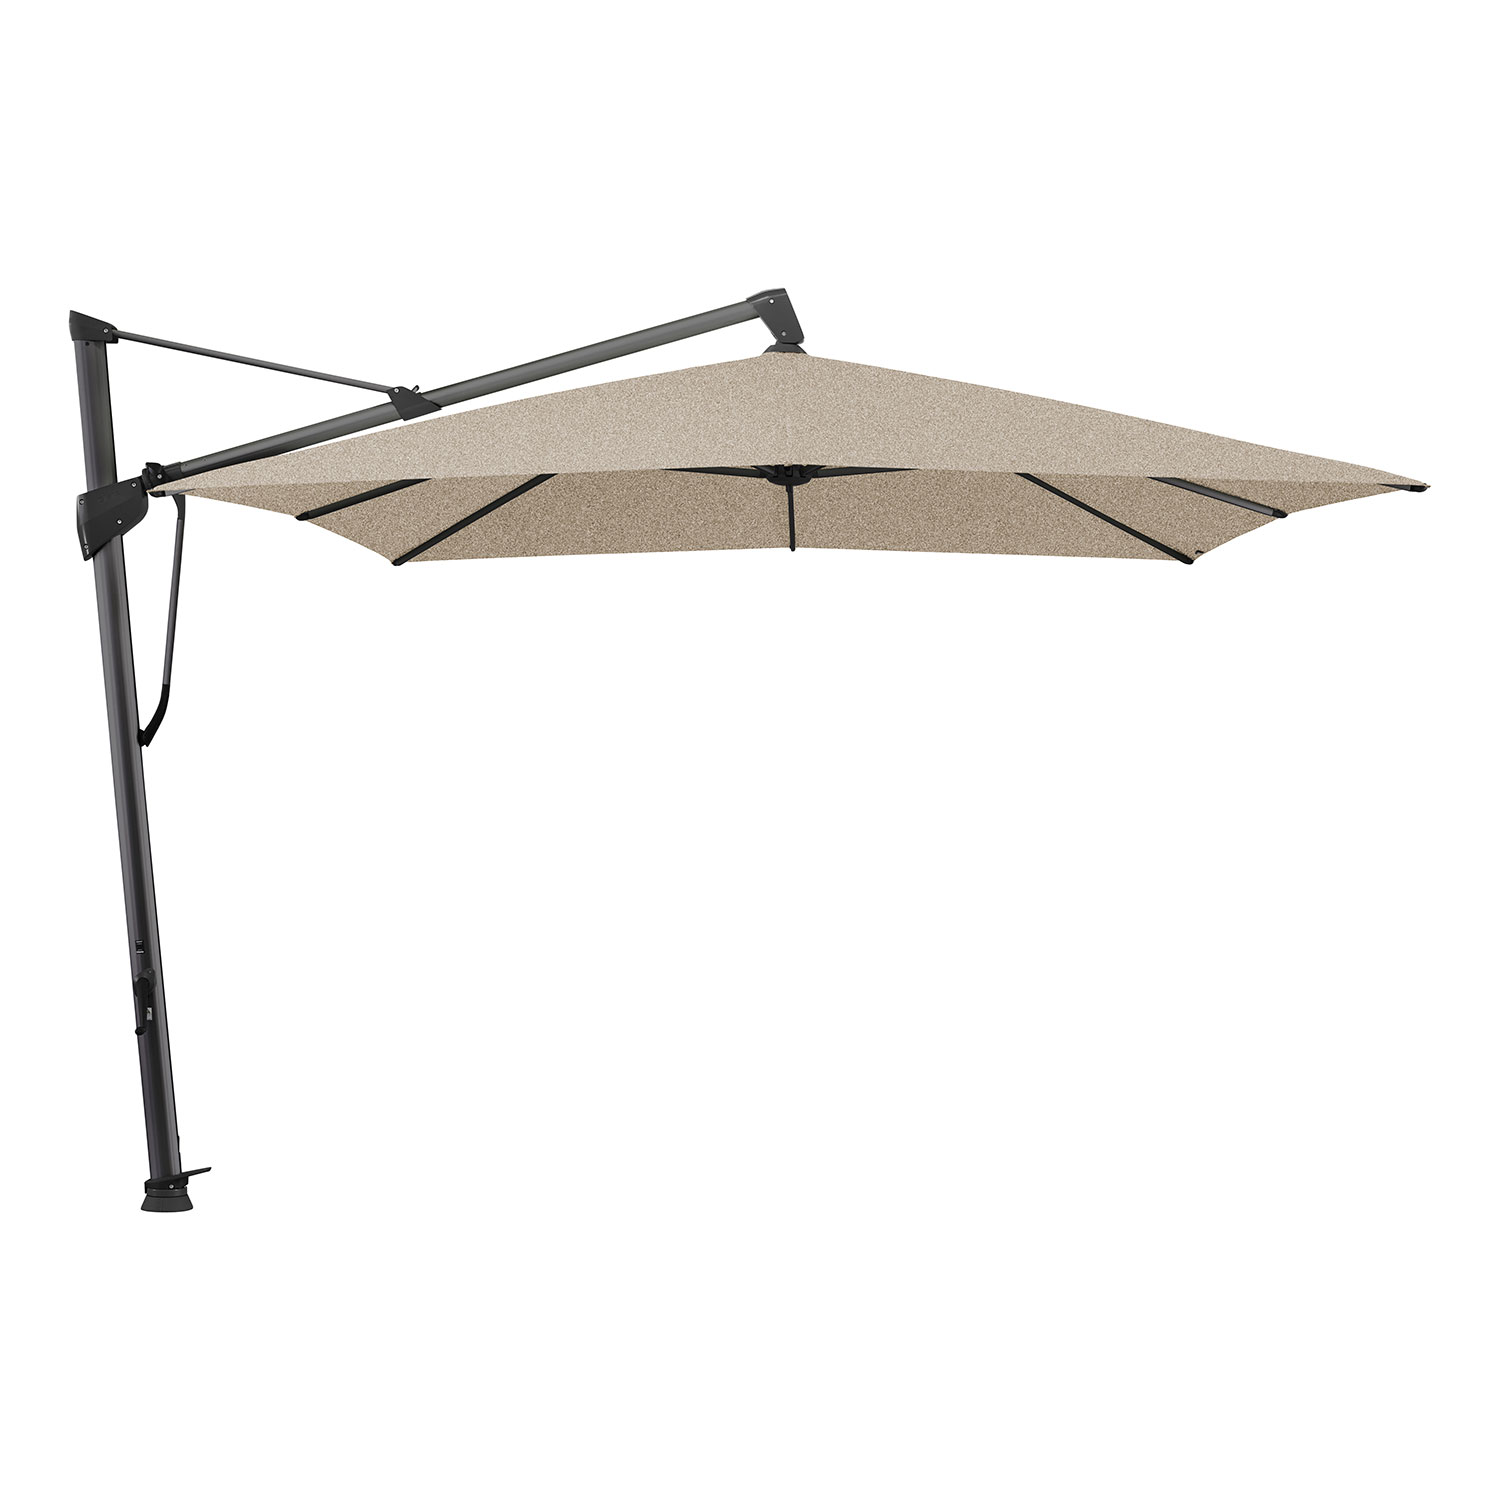 Glatz Sombrano S+ frihängande parasoll 400×300 cm kat.5 antracite alu / 650 camel